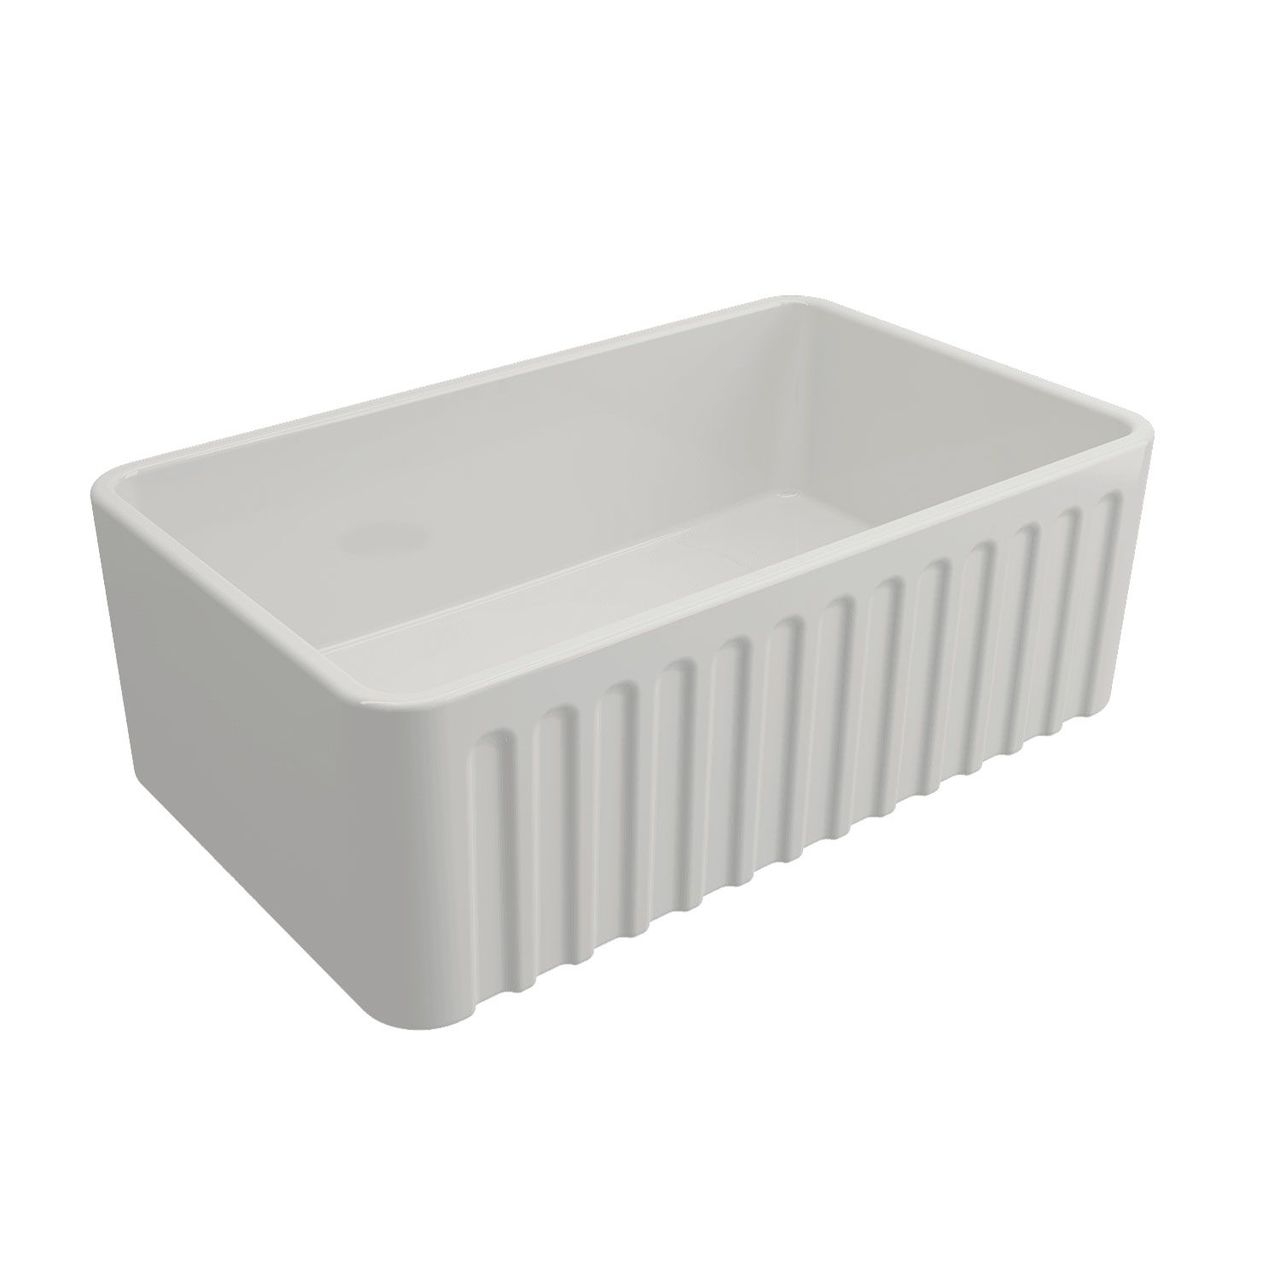 Type: Ceramic Sinks